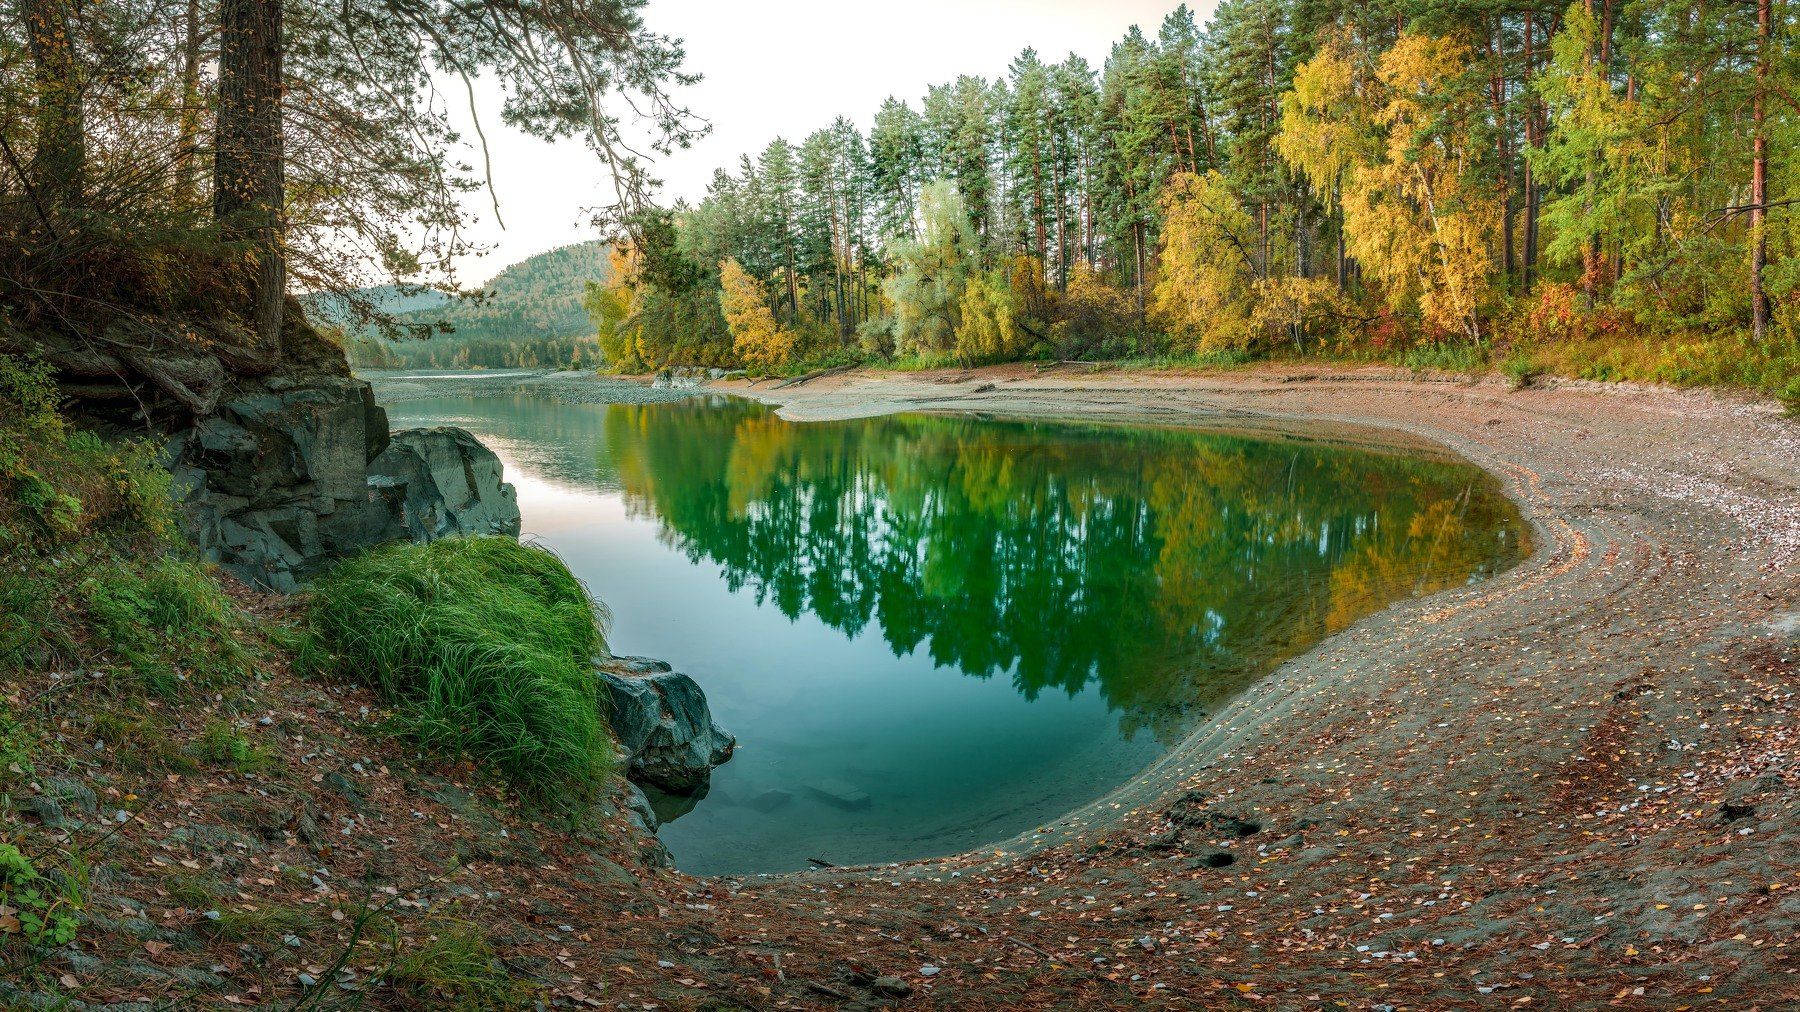 #nikon #landscape #katun #altai #russia #autumn #river #altaikrai #nature #water #mirrors #forest #yellow #yellowleaves #никон #пейзаж #катунь #алтай #россия #природа #осень #река #отражение, Денис Соломахин